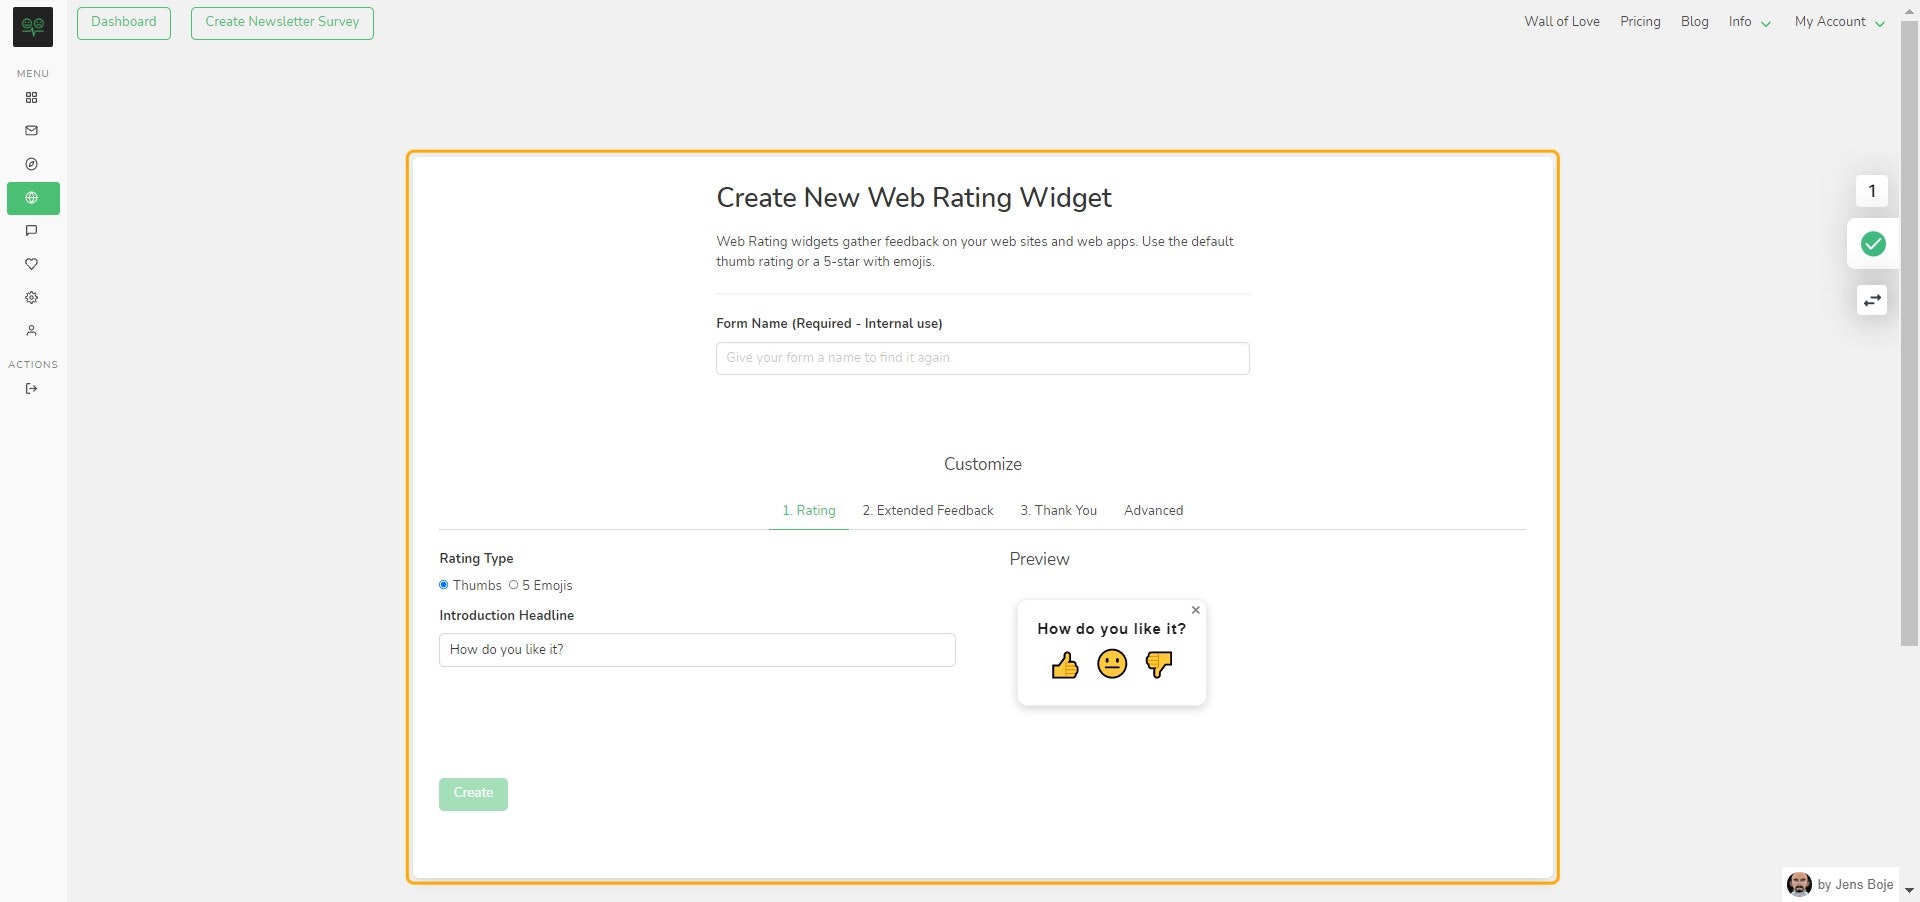 Create New Web Rating Widget window